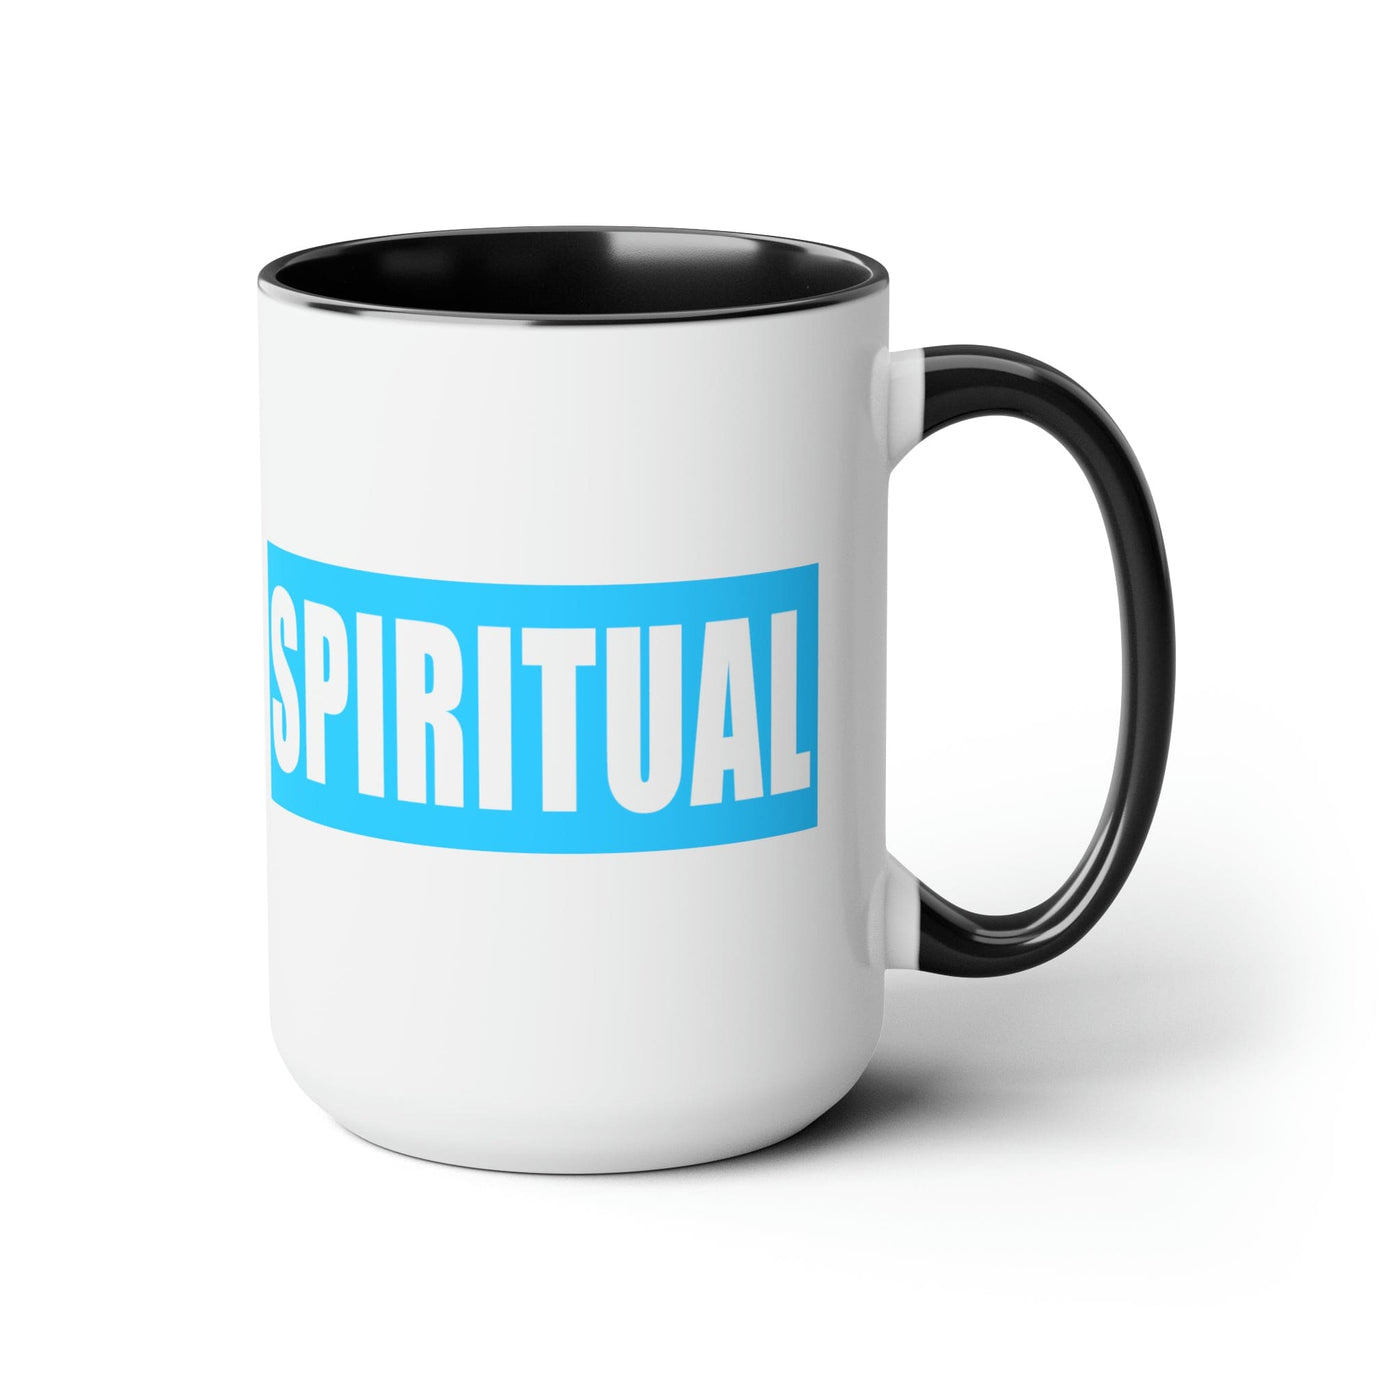 Accent Ceramic Coffee Mug 15oz - Spiritual Light Blue Colorblock Illustration